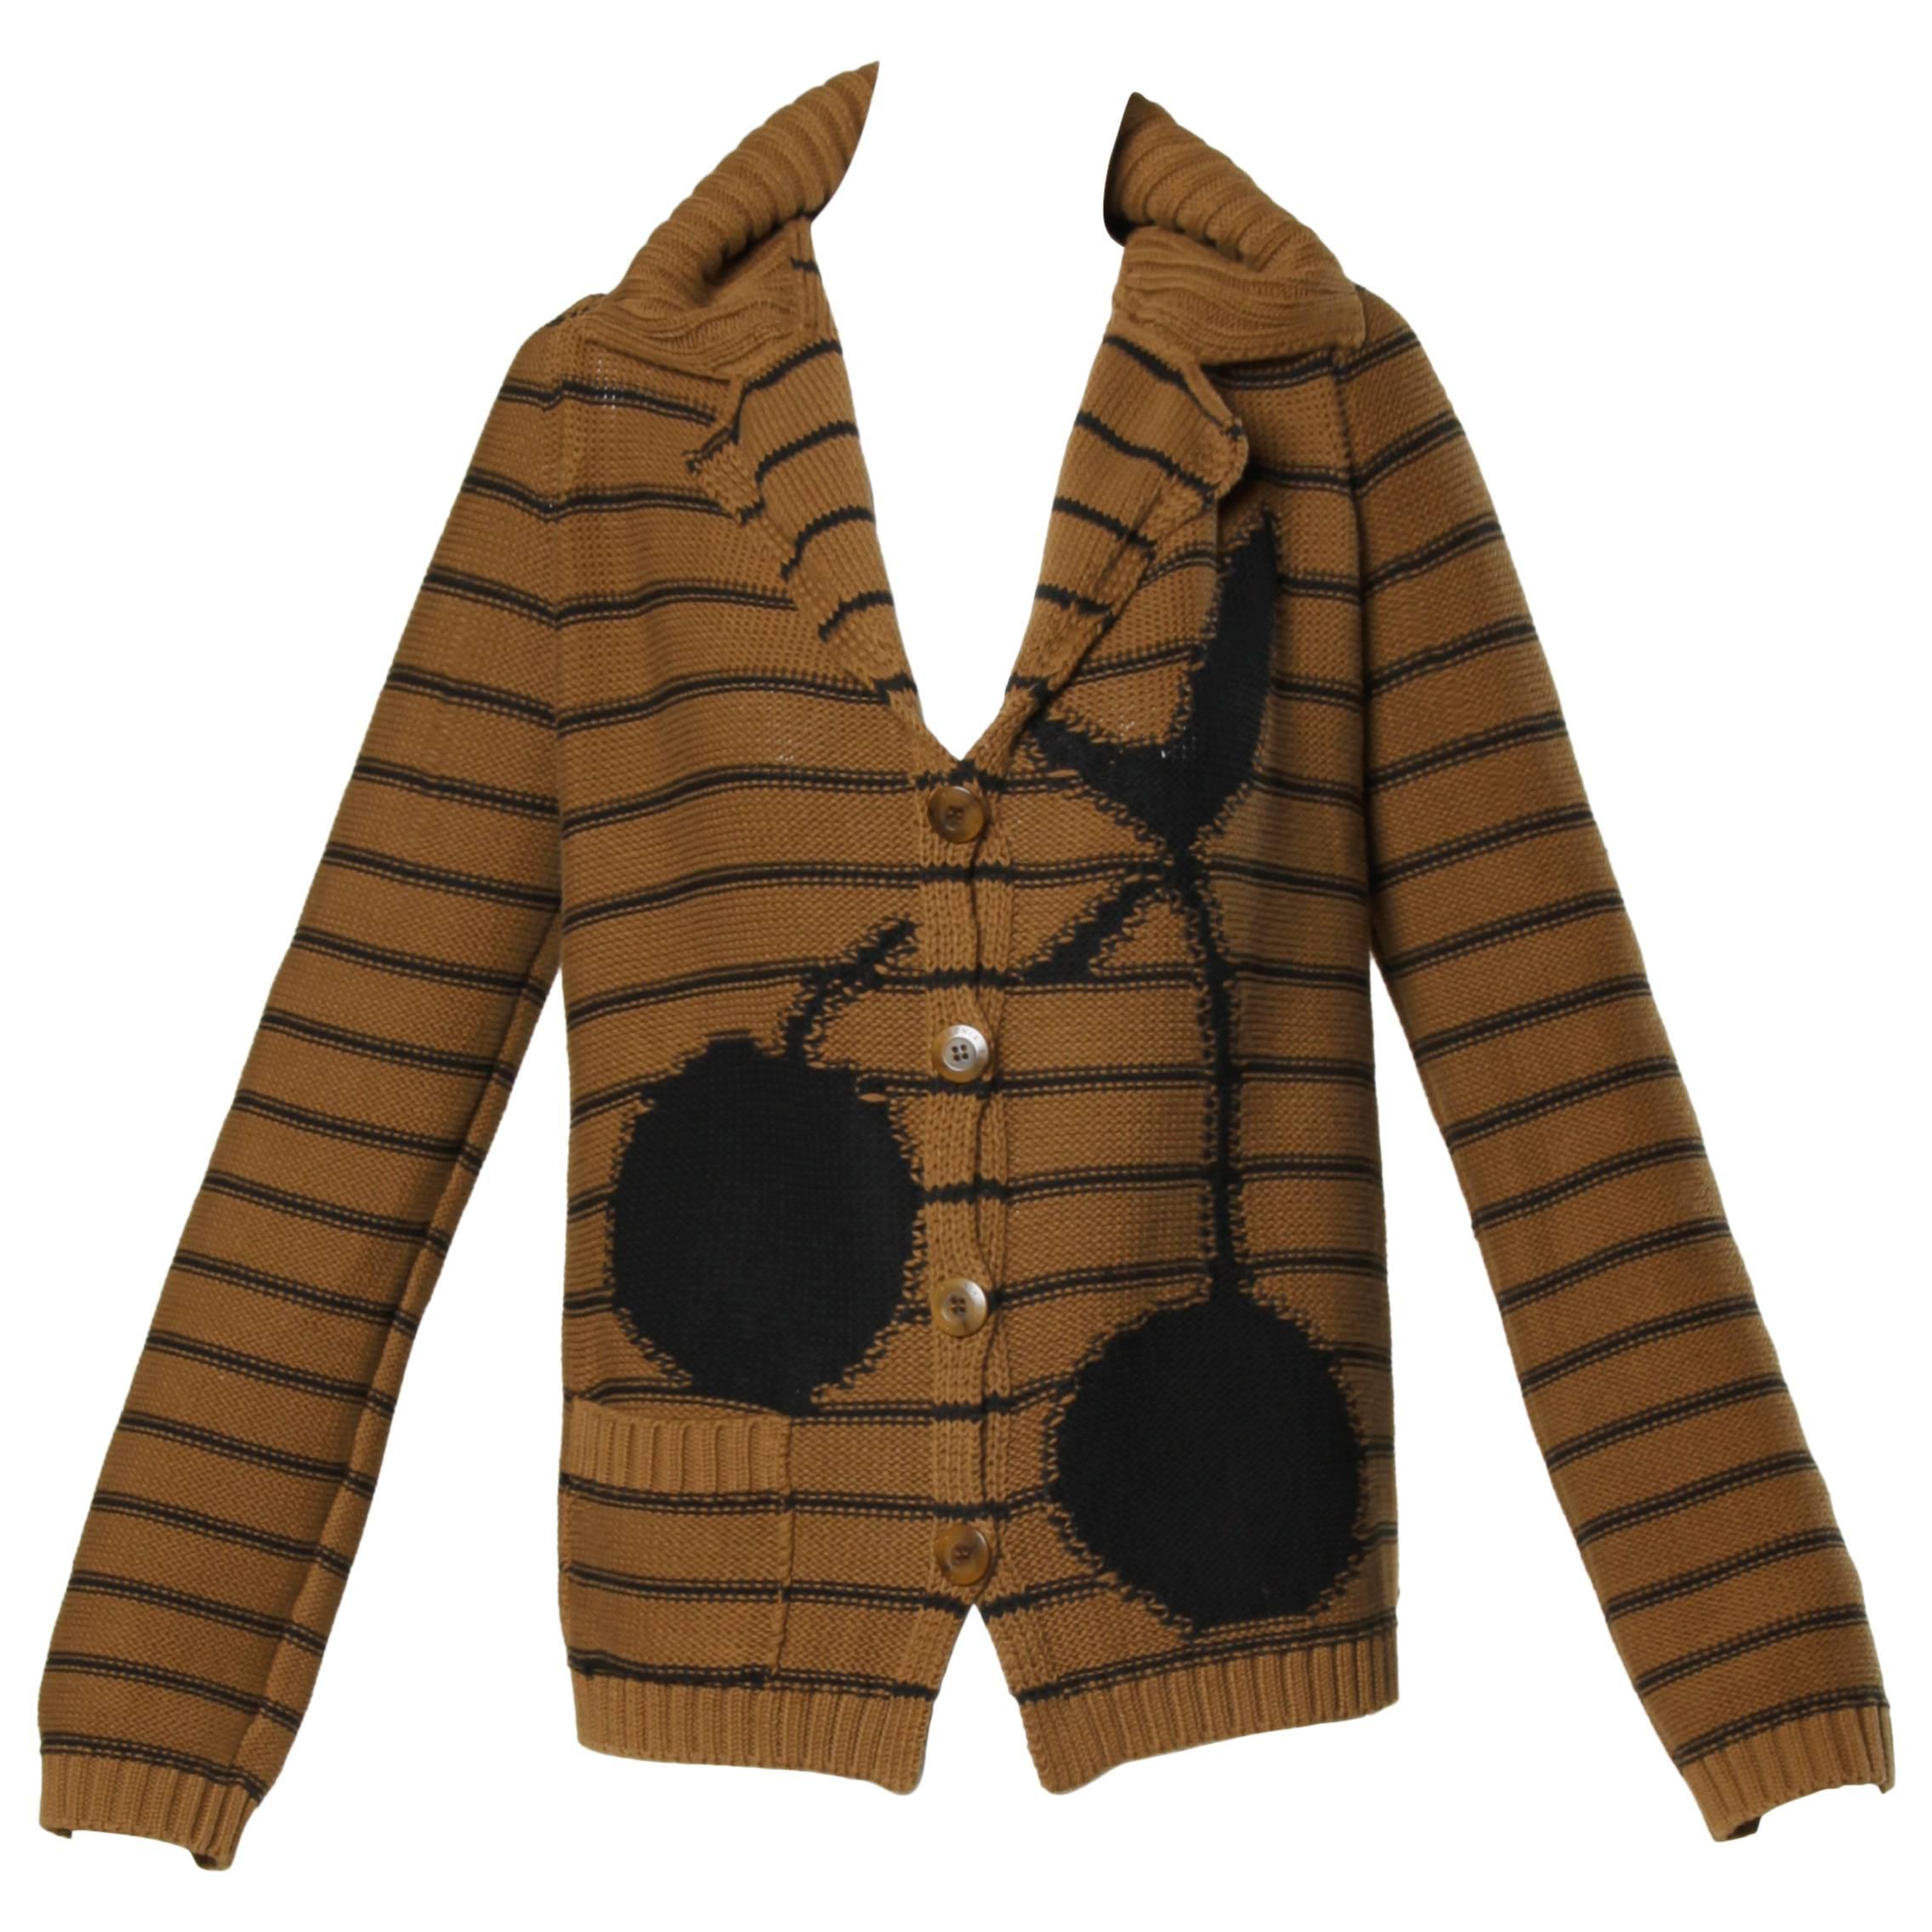 Sonia Rykiel Brown Striped Knit Cardigan Sweater with Black Cherries Design